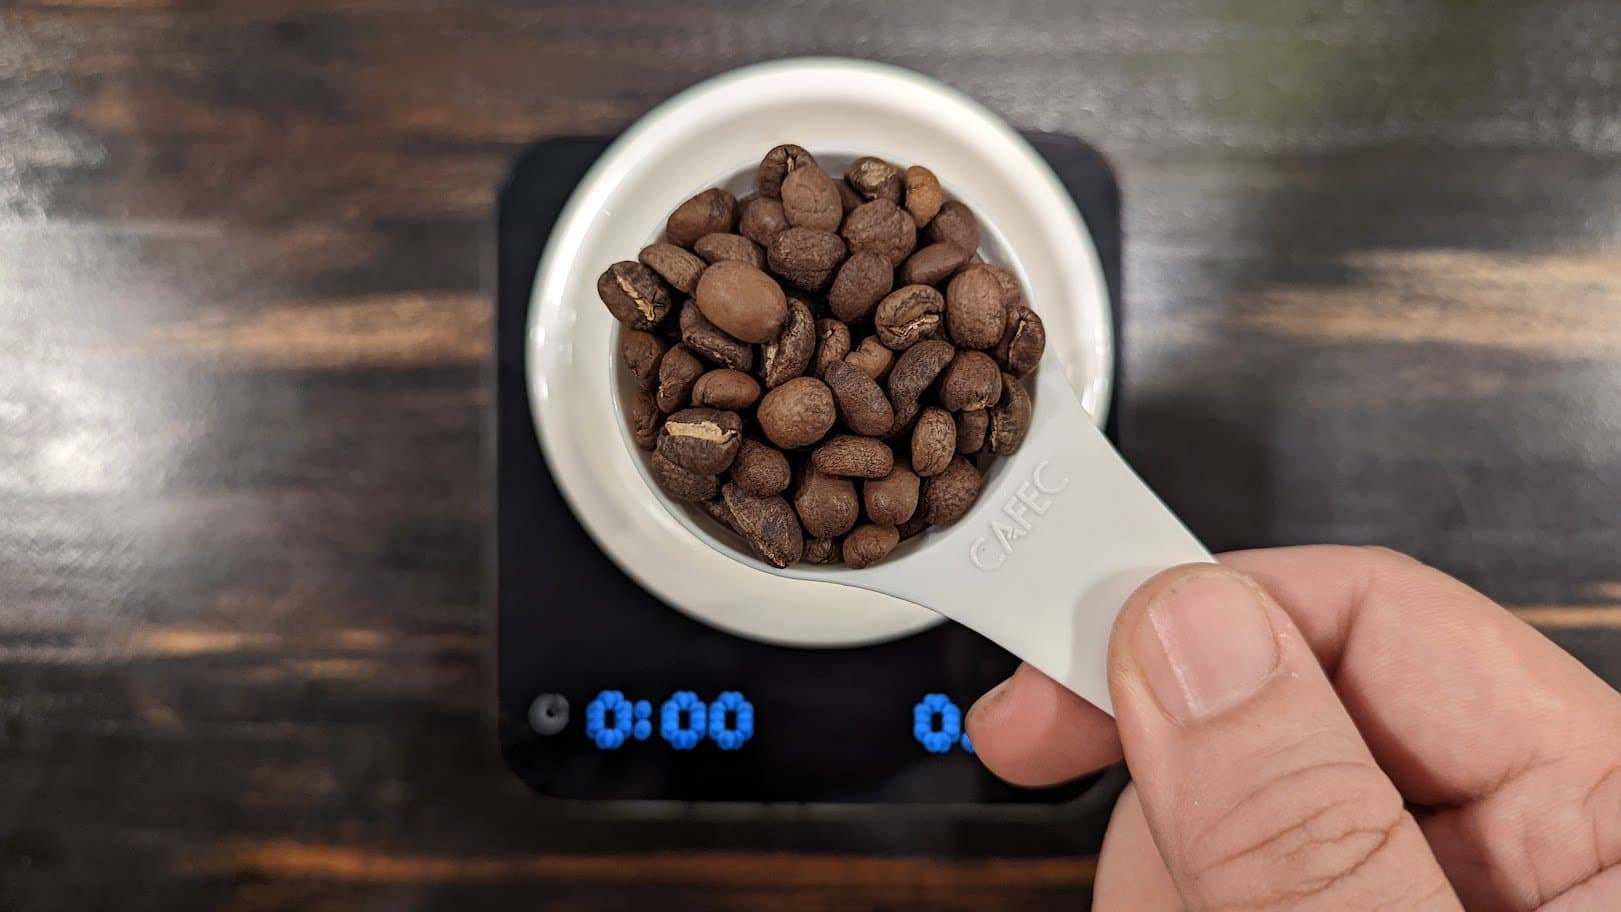 Calculadora de la proporción de café a agua: la taza perfecta cada vez